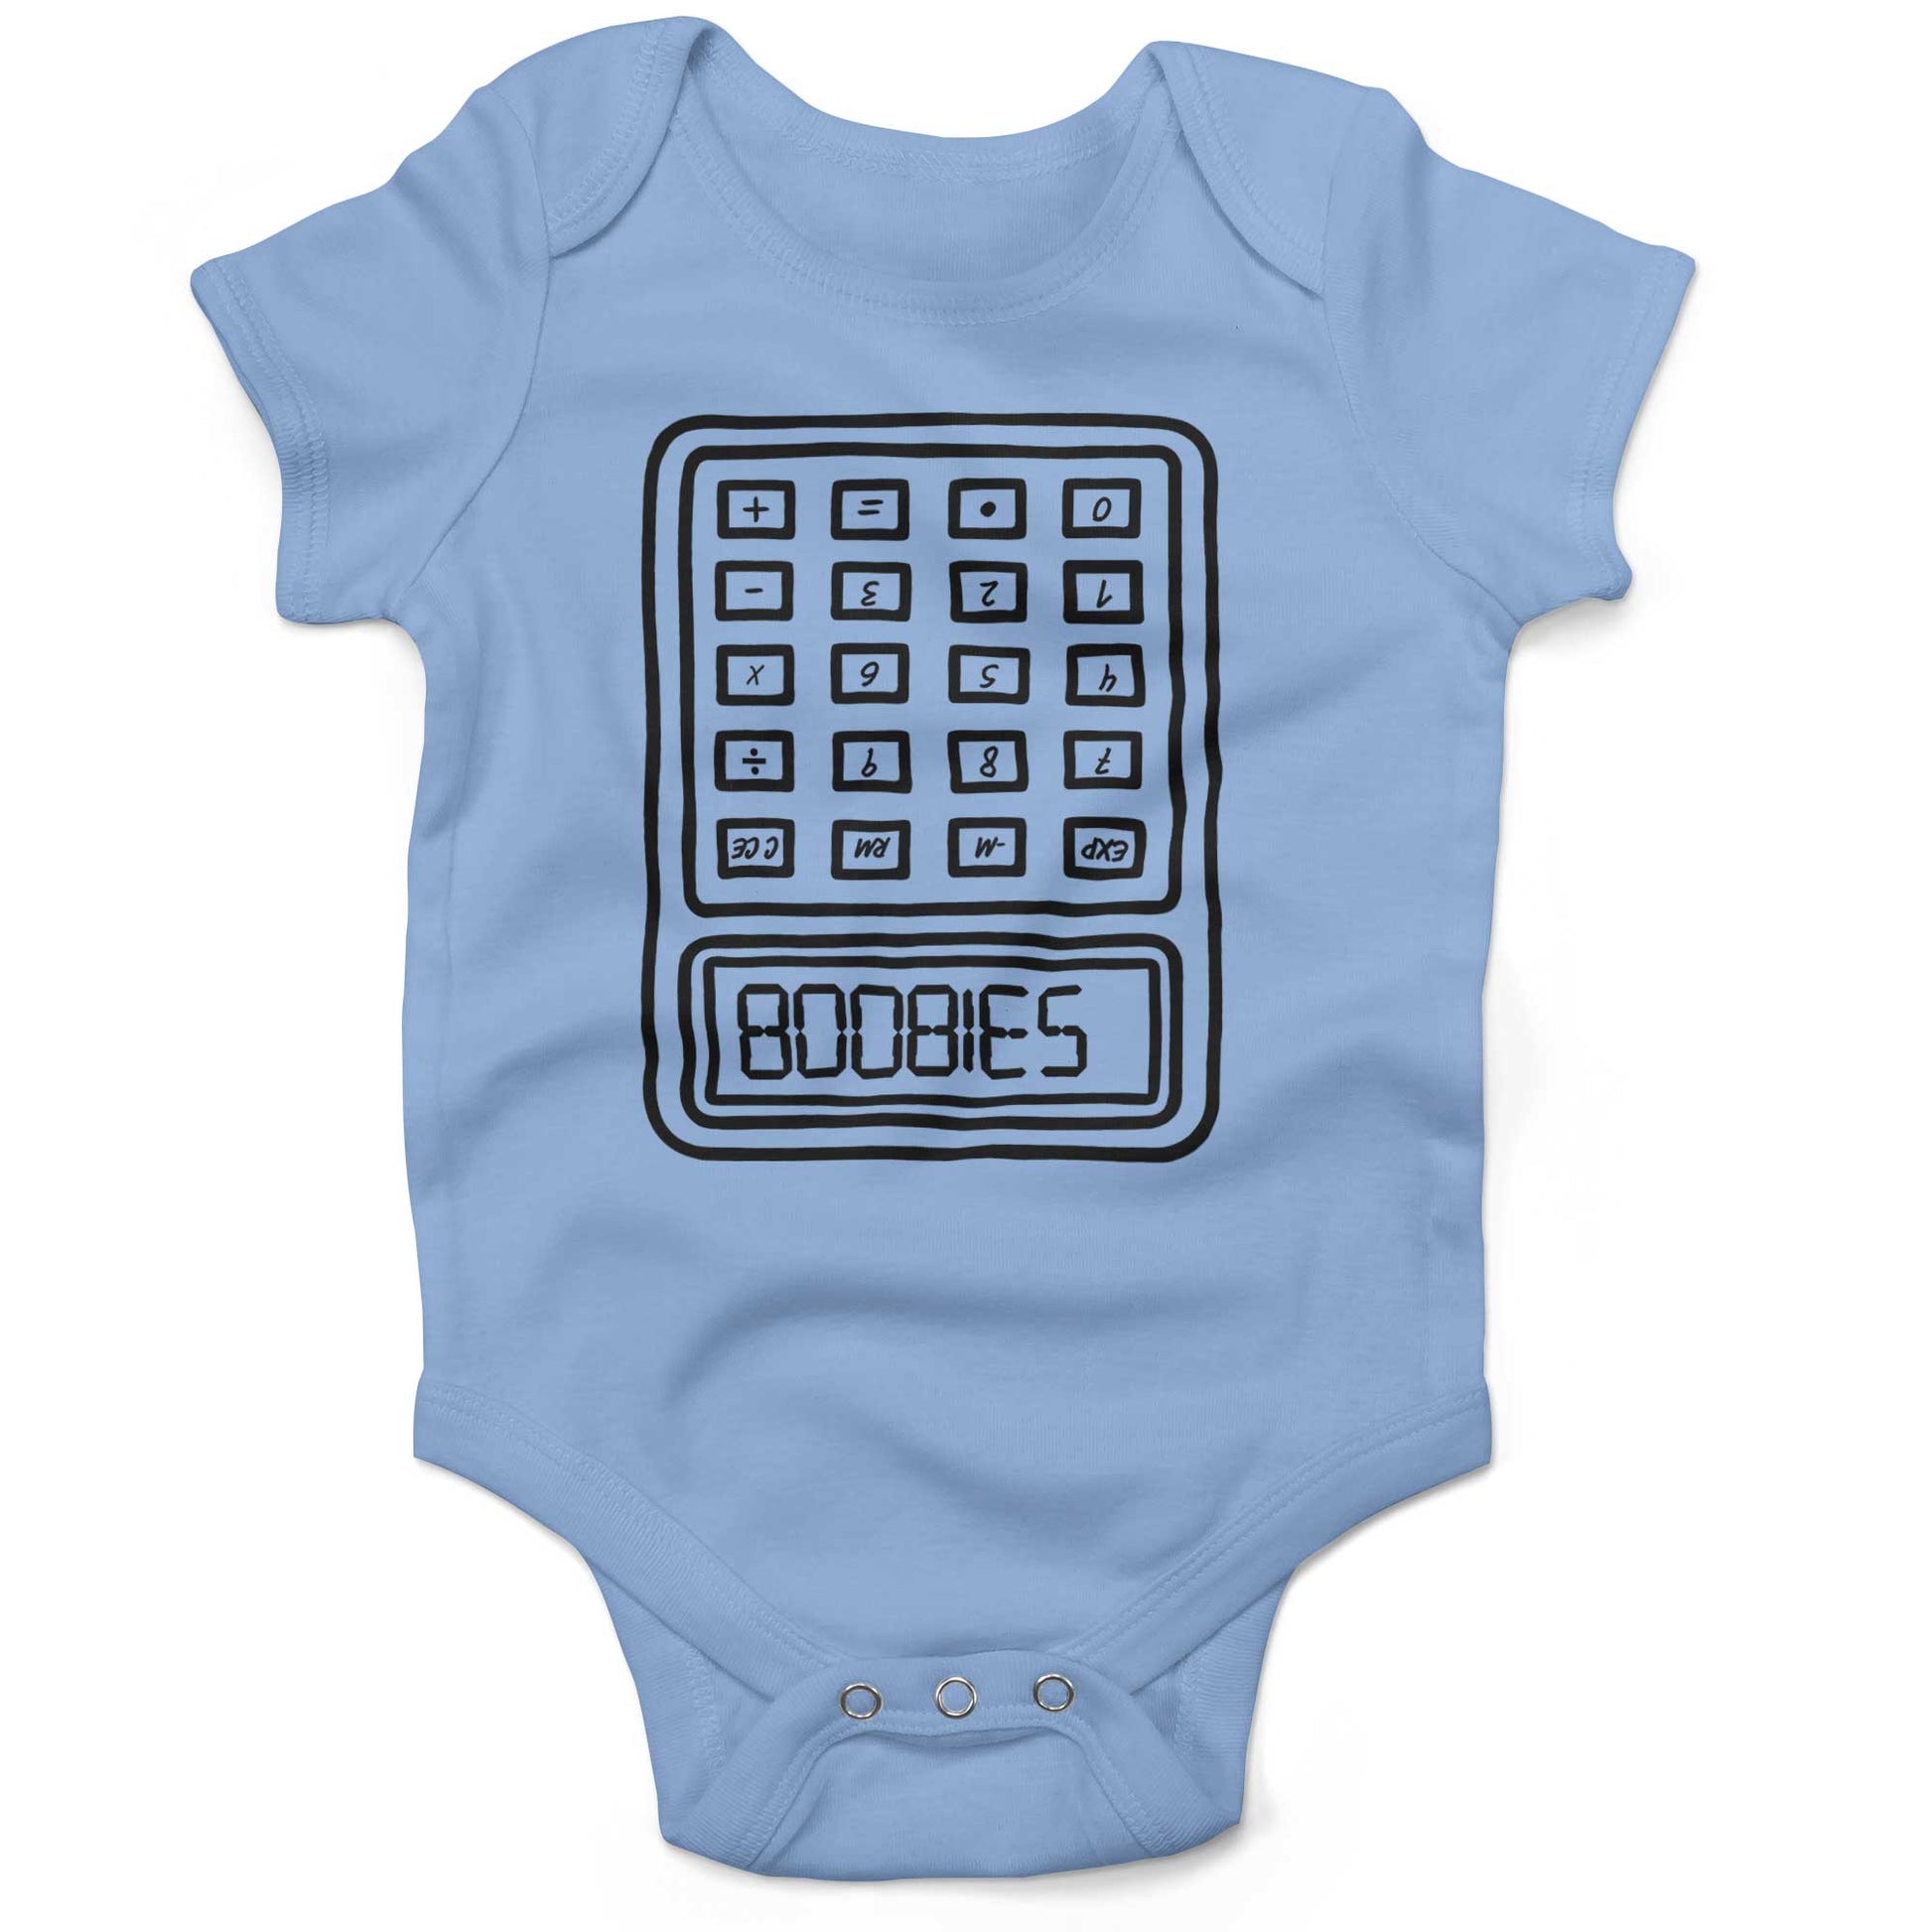 BOOBIES Infant Bodysuit or Raglan Baby Tee-Organic Baby Blue-3-6 months